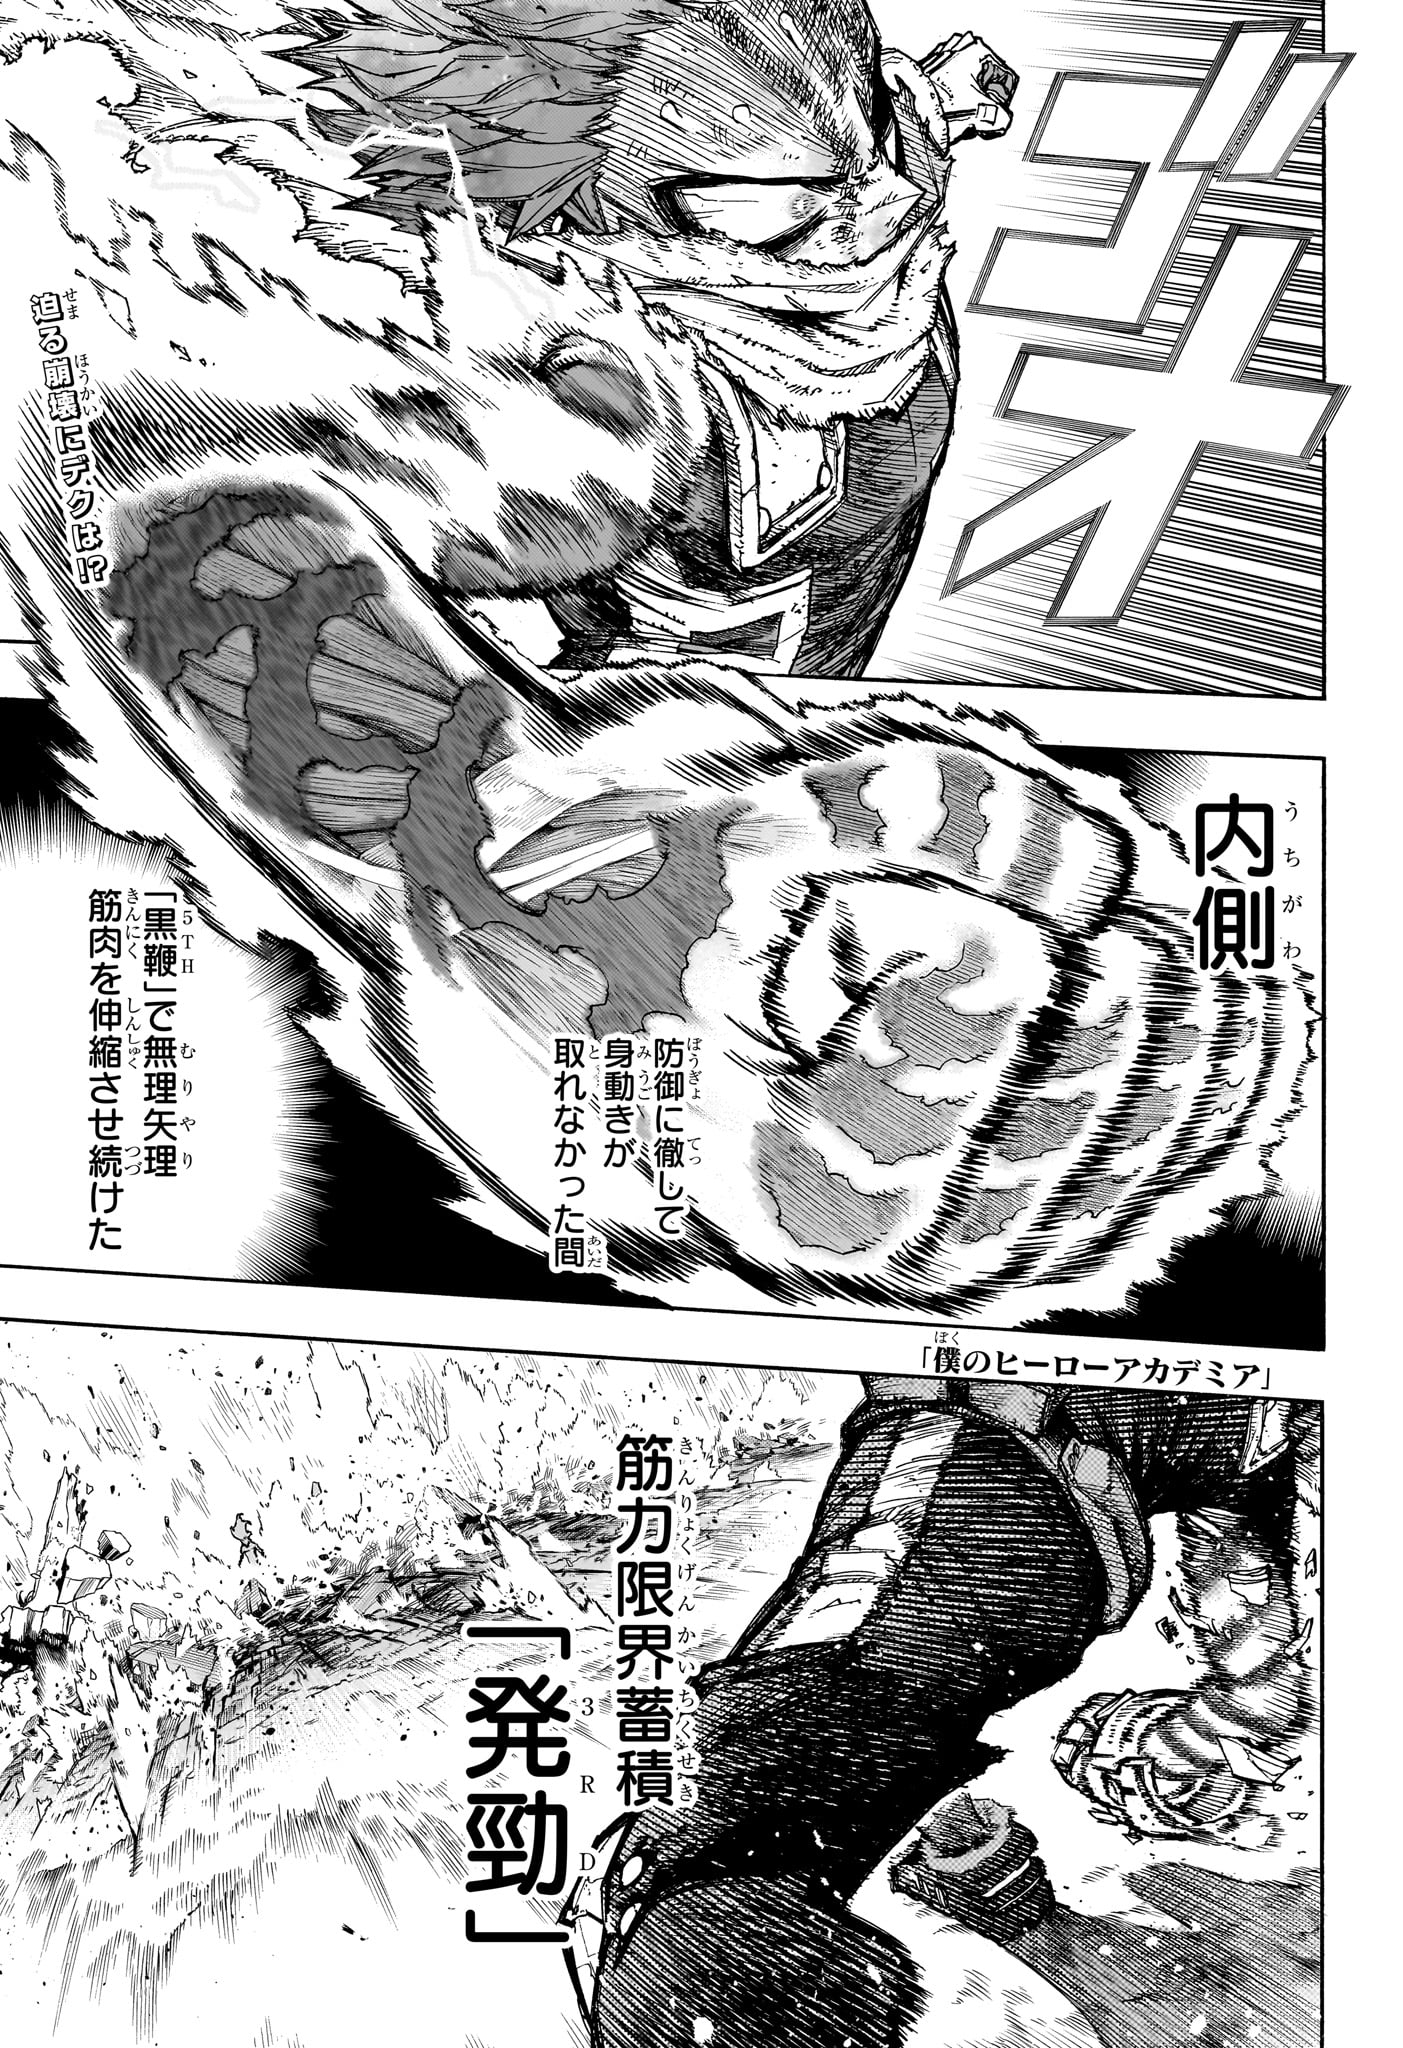 Boku no Hero Academia - Chapter 412 - Page 1